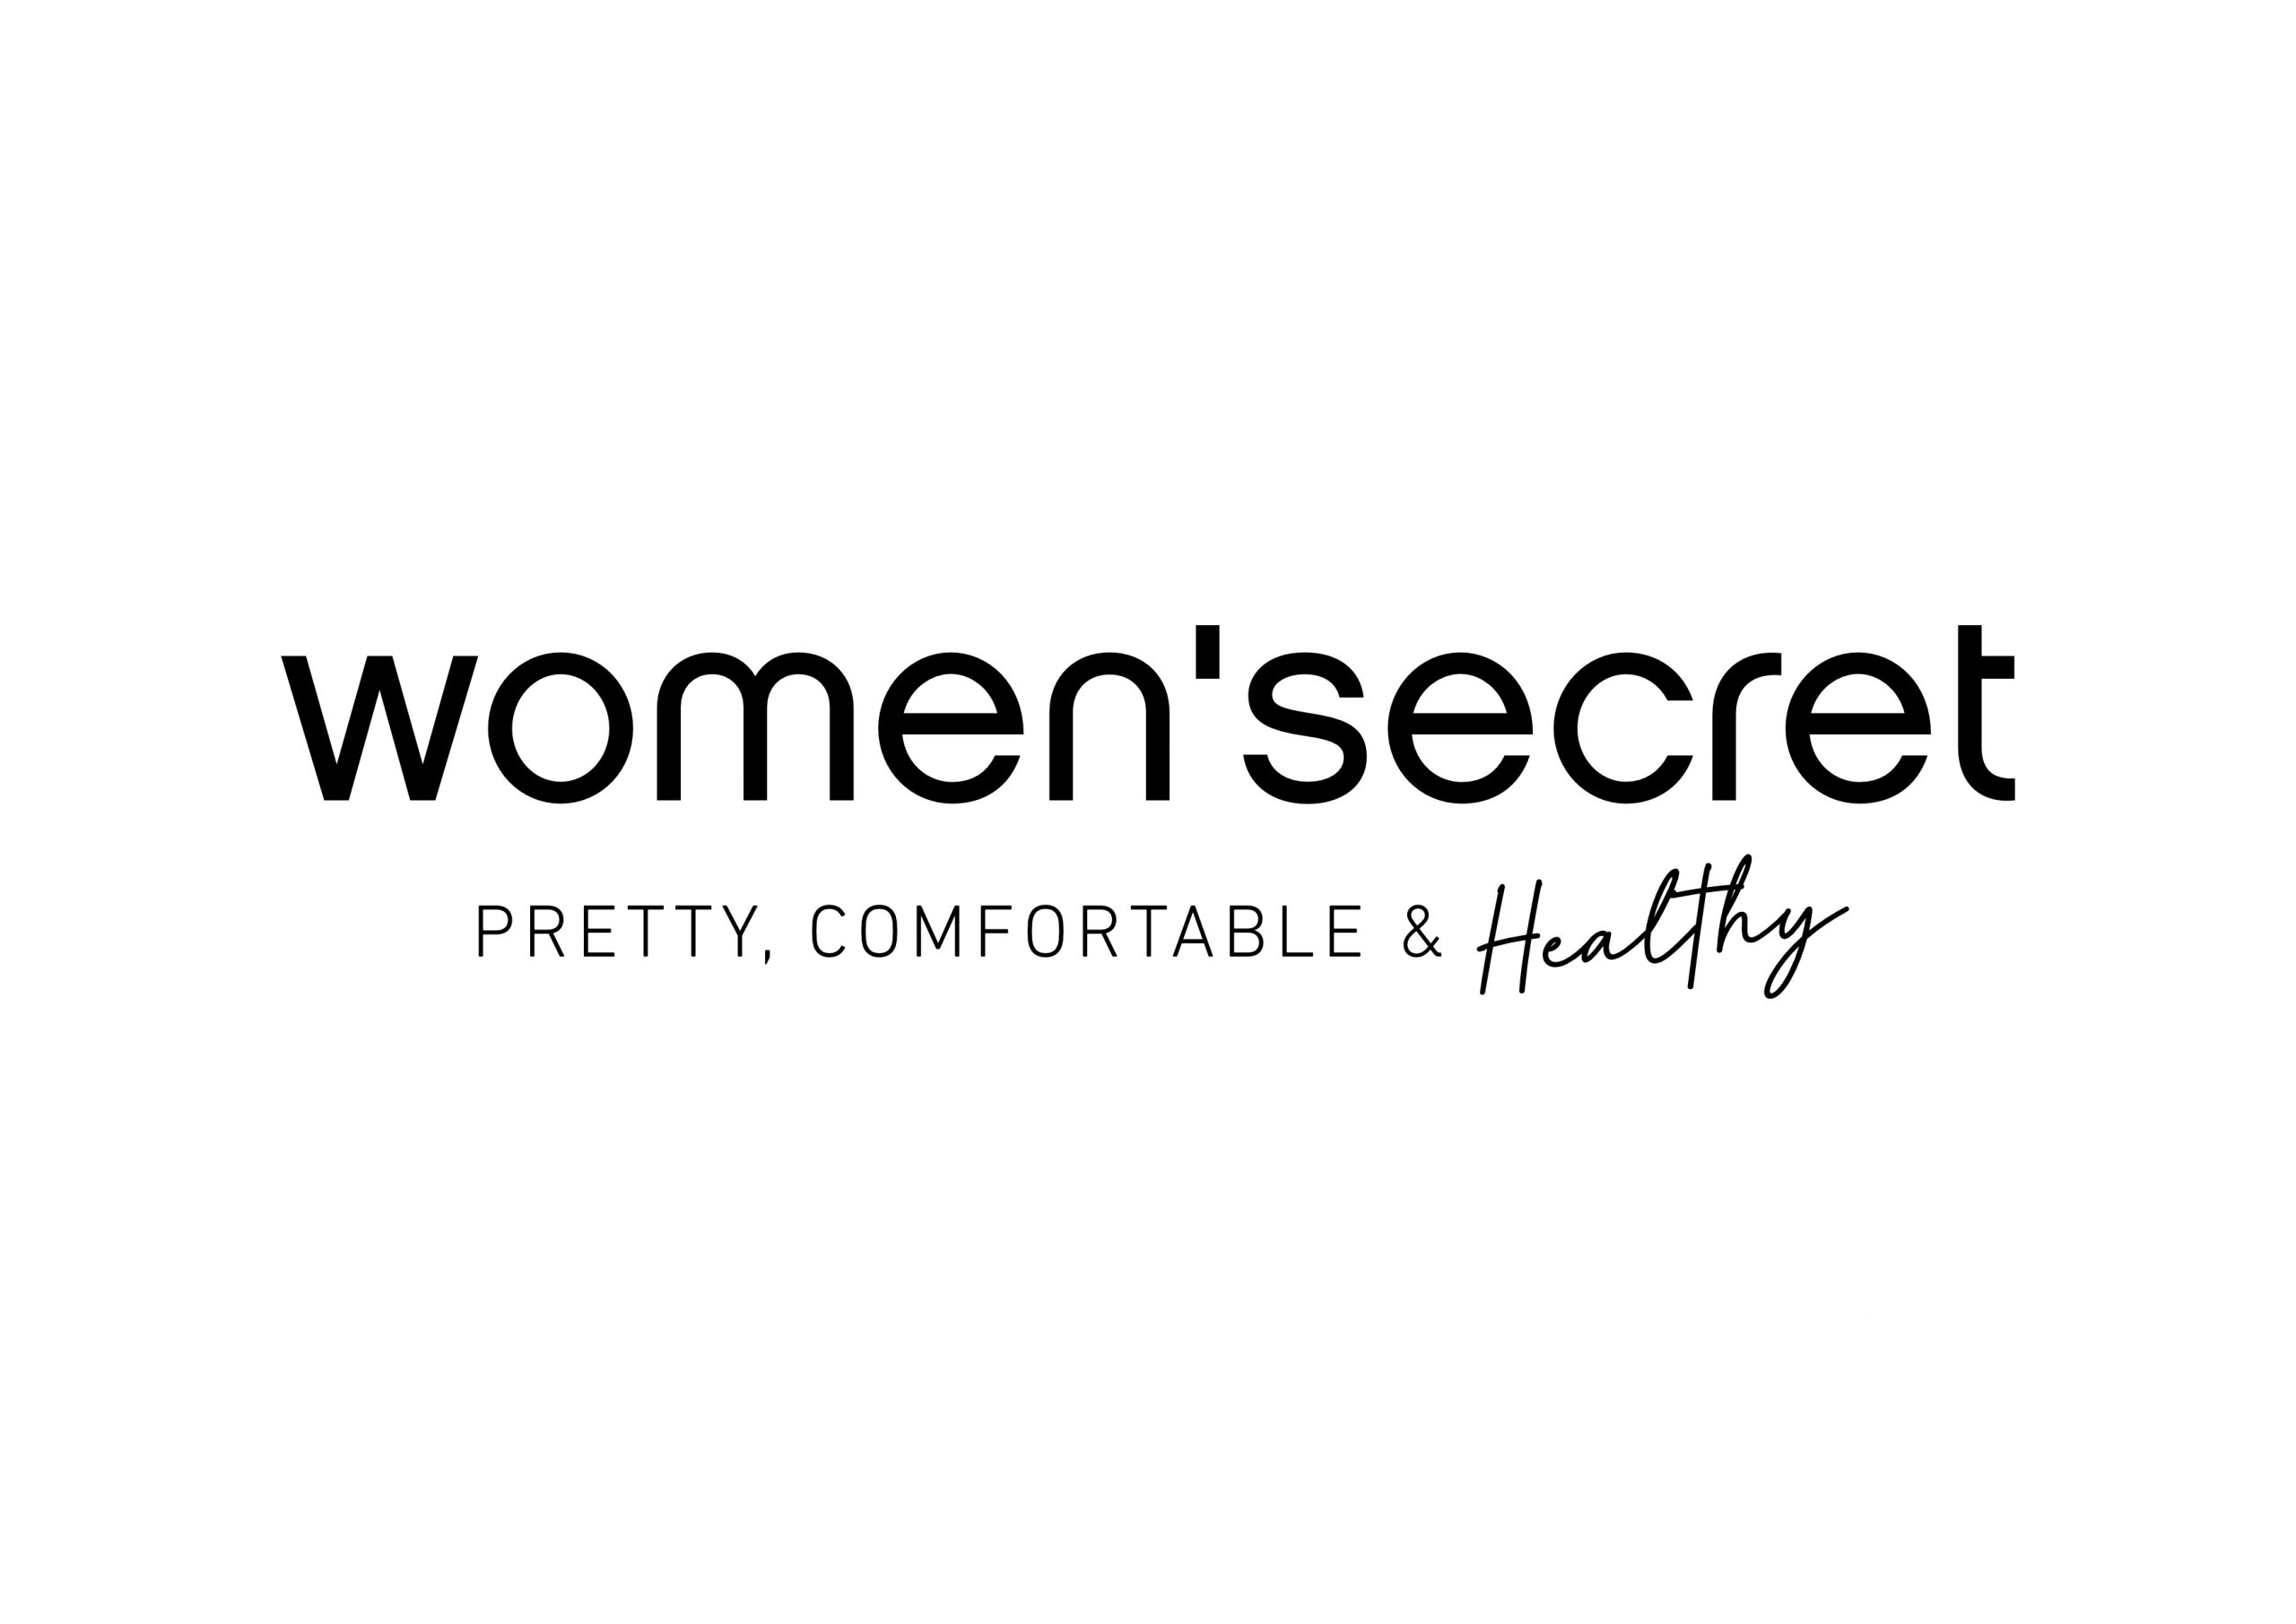 Women'secret inaugura nova loja no Chiado